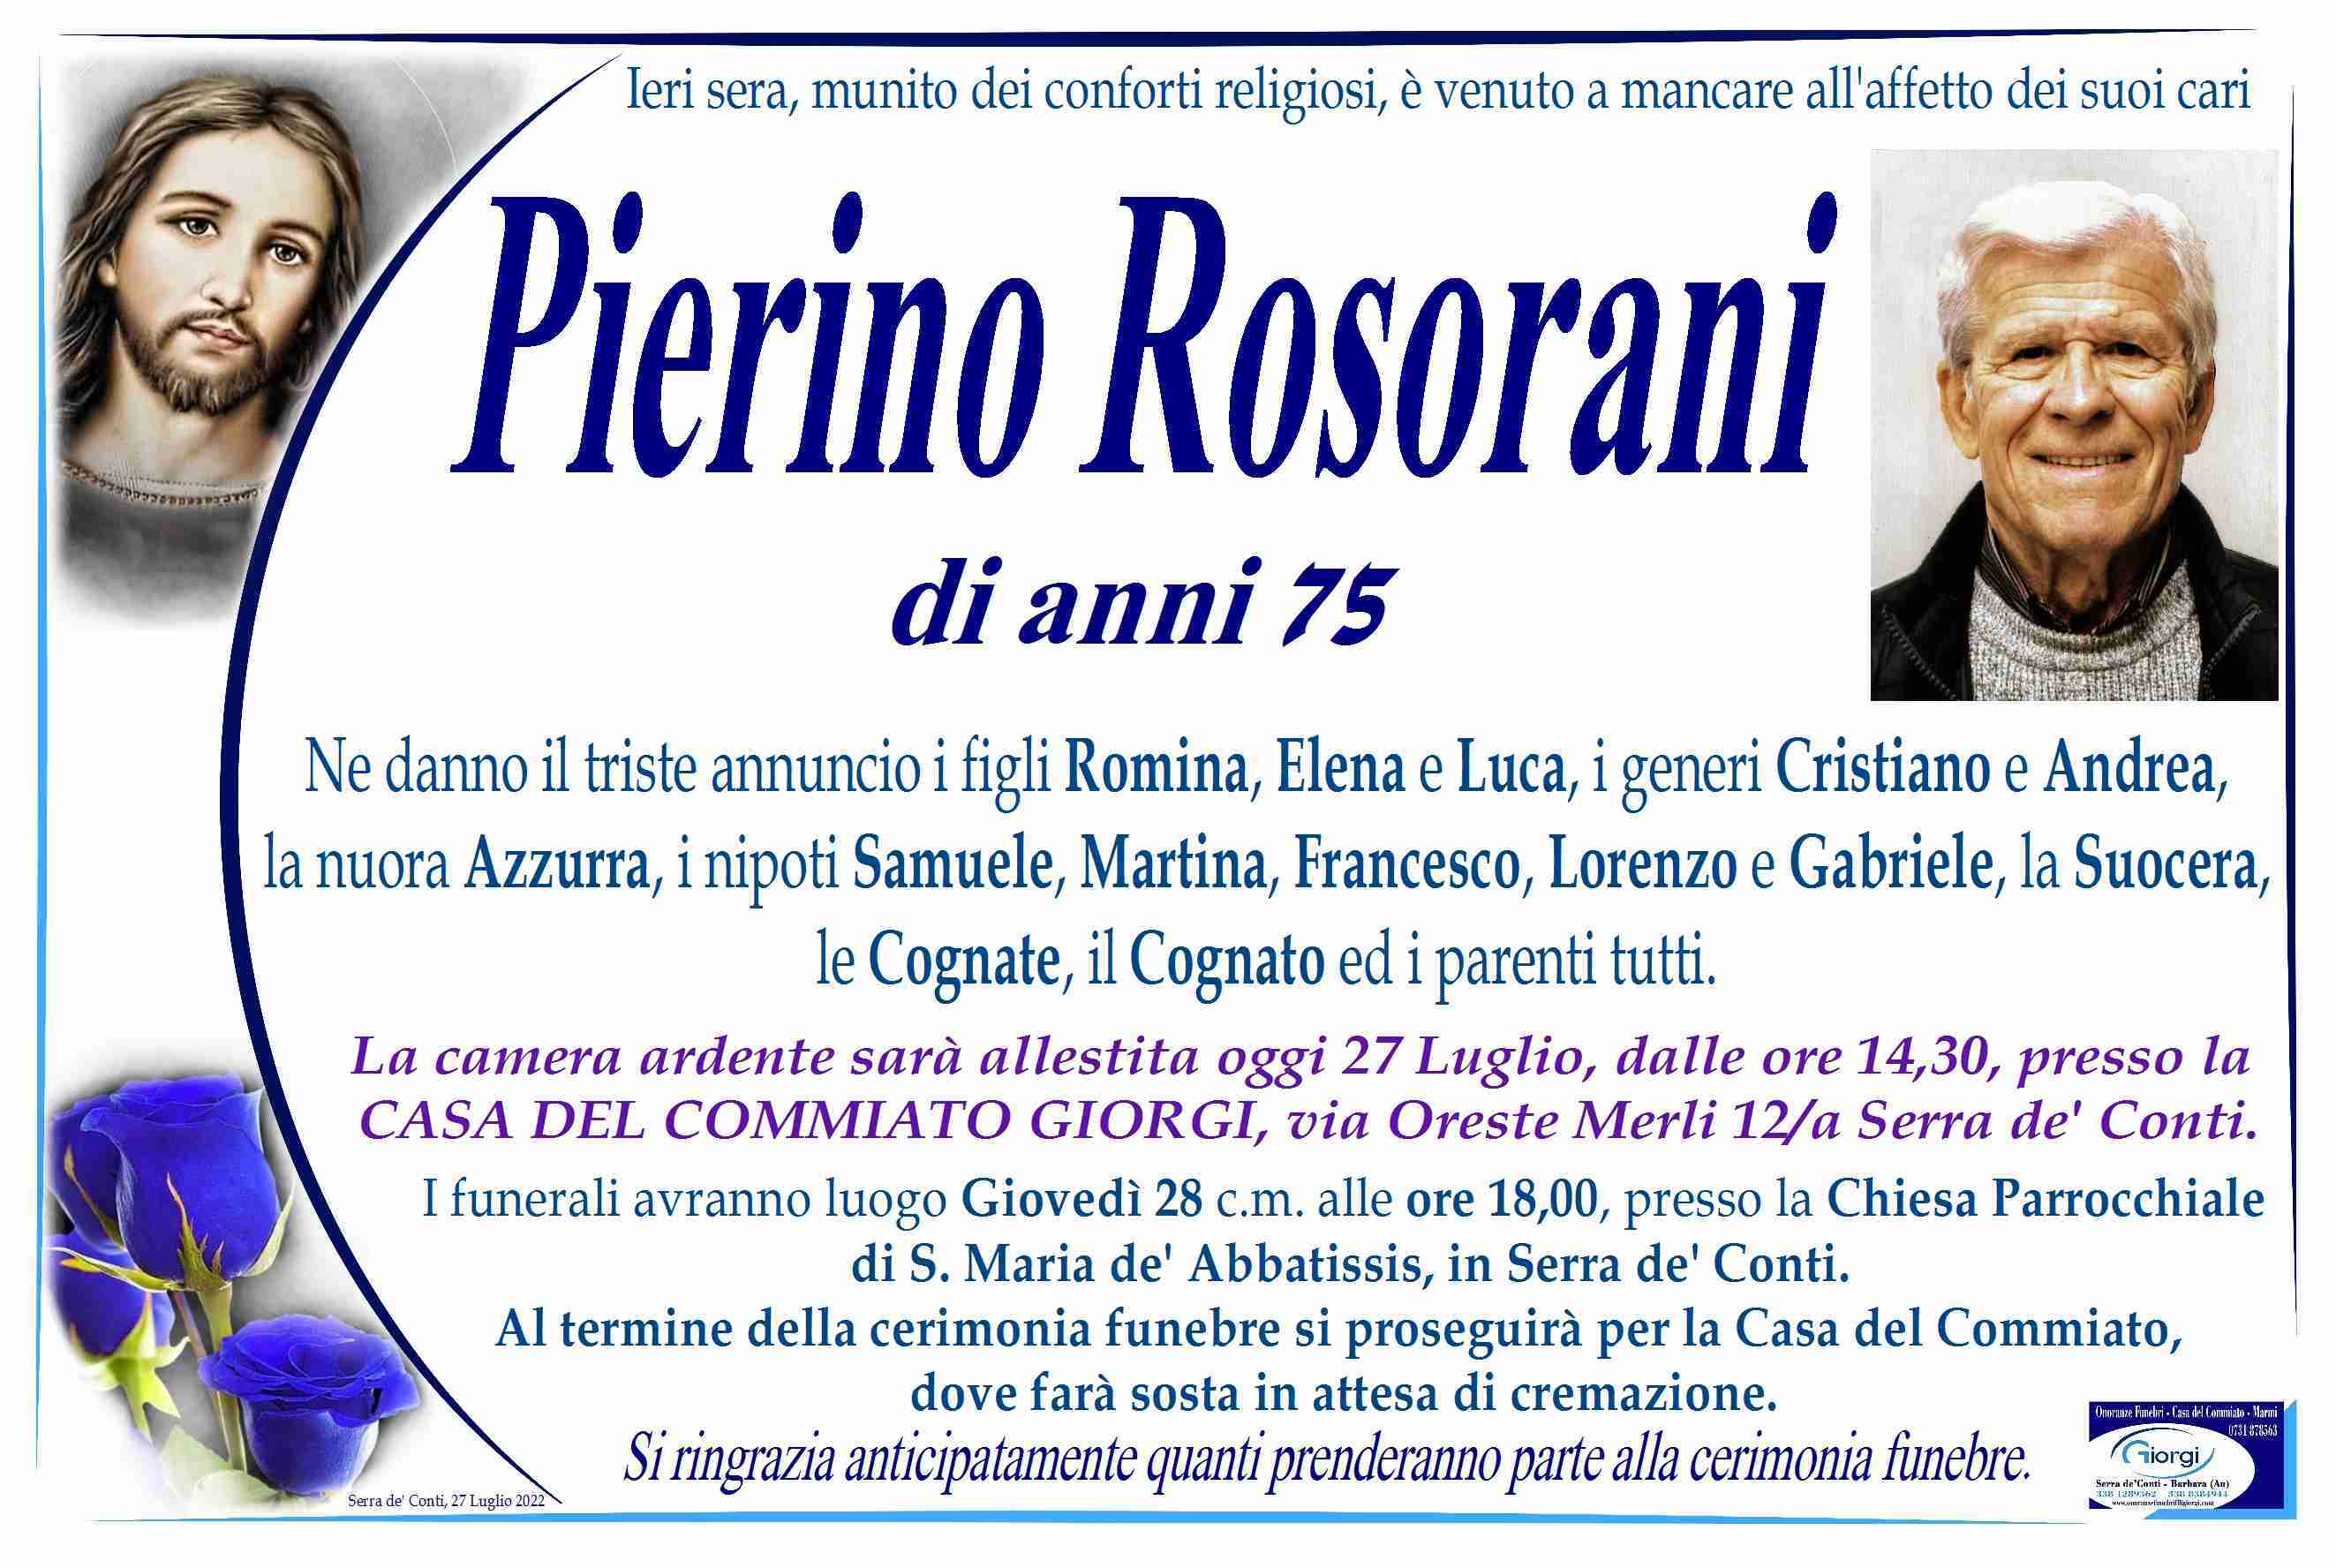 Pierino Rosorani